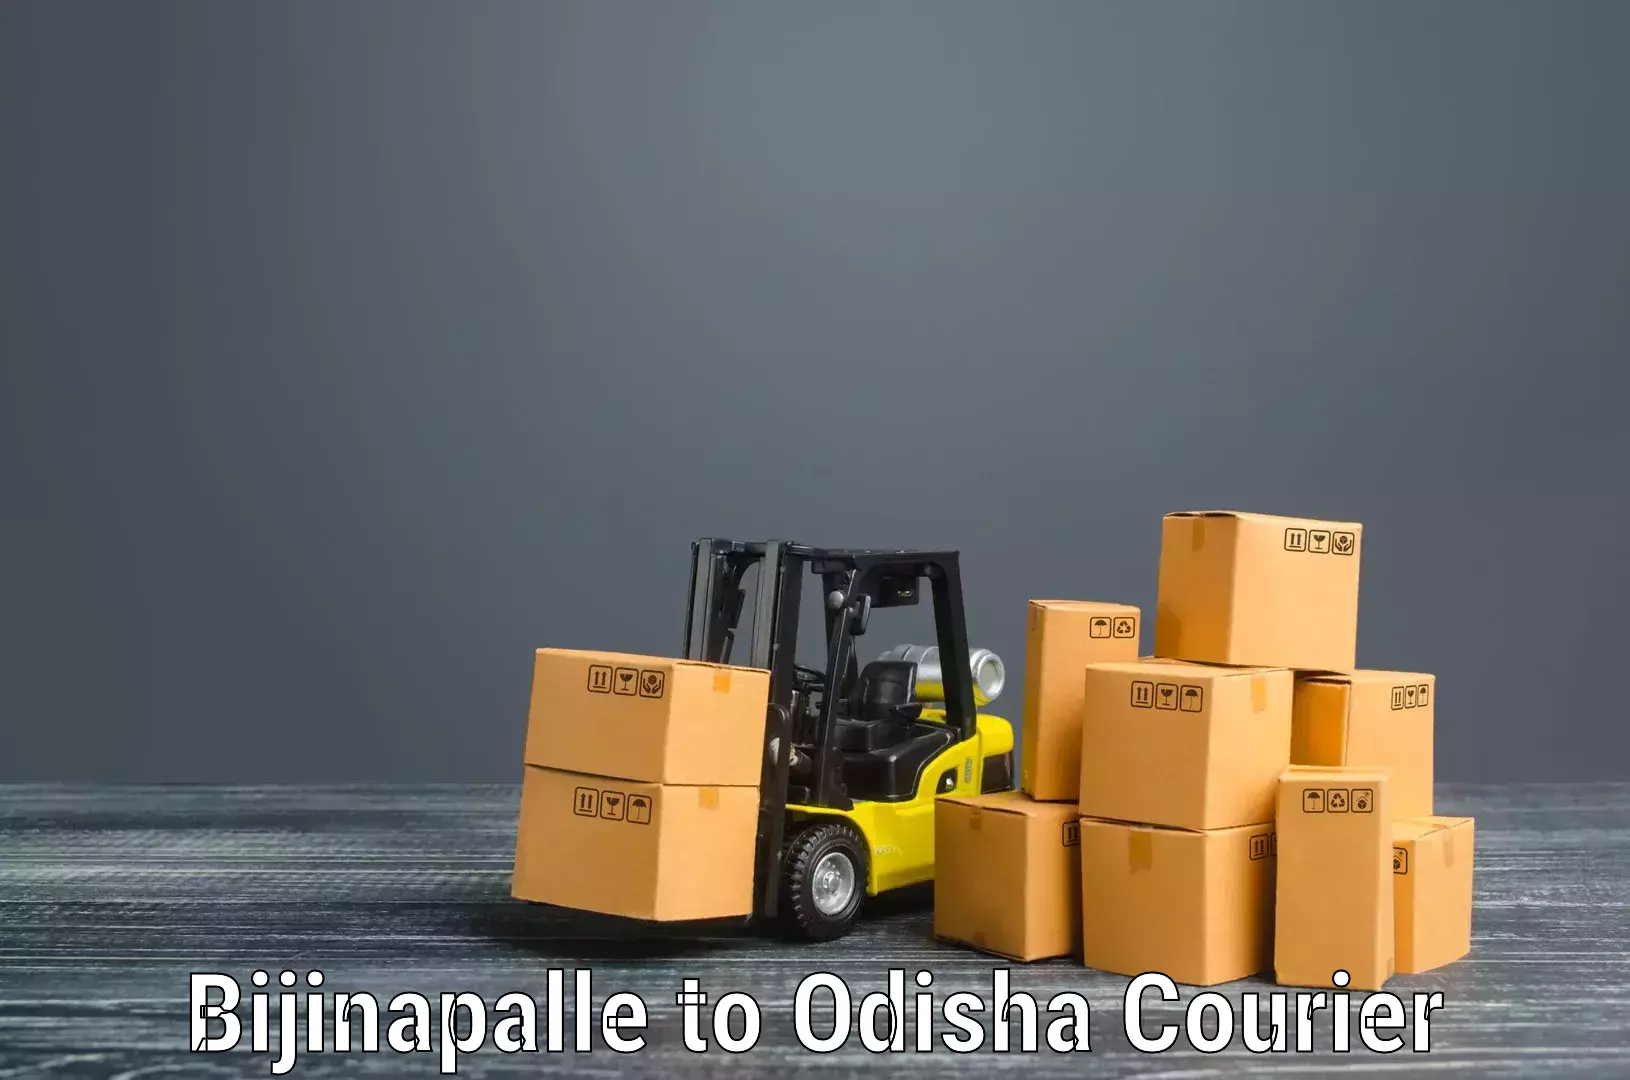 Efficient moving company Bijinapalle to Sundergarh